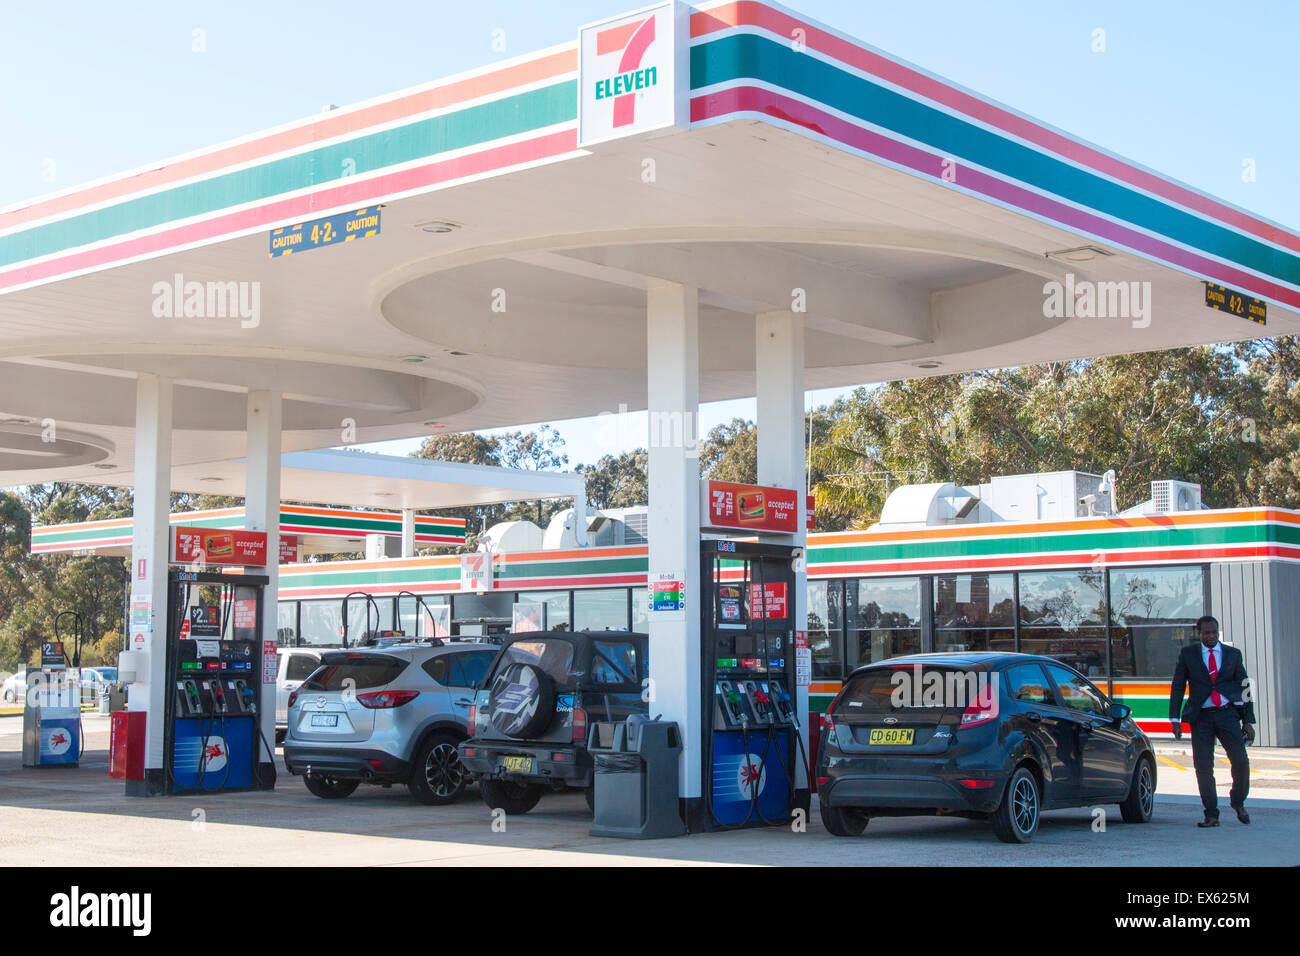 7 eleven branded petrol station at Pheasants nest service station on the motorway Sydney,australia Stock Photo